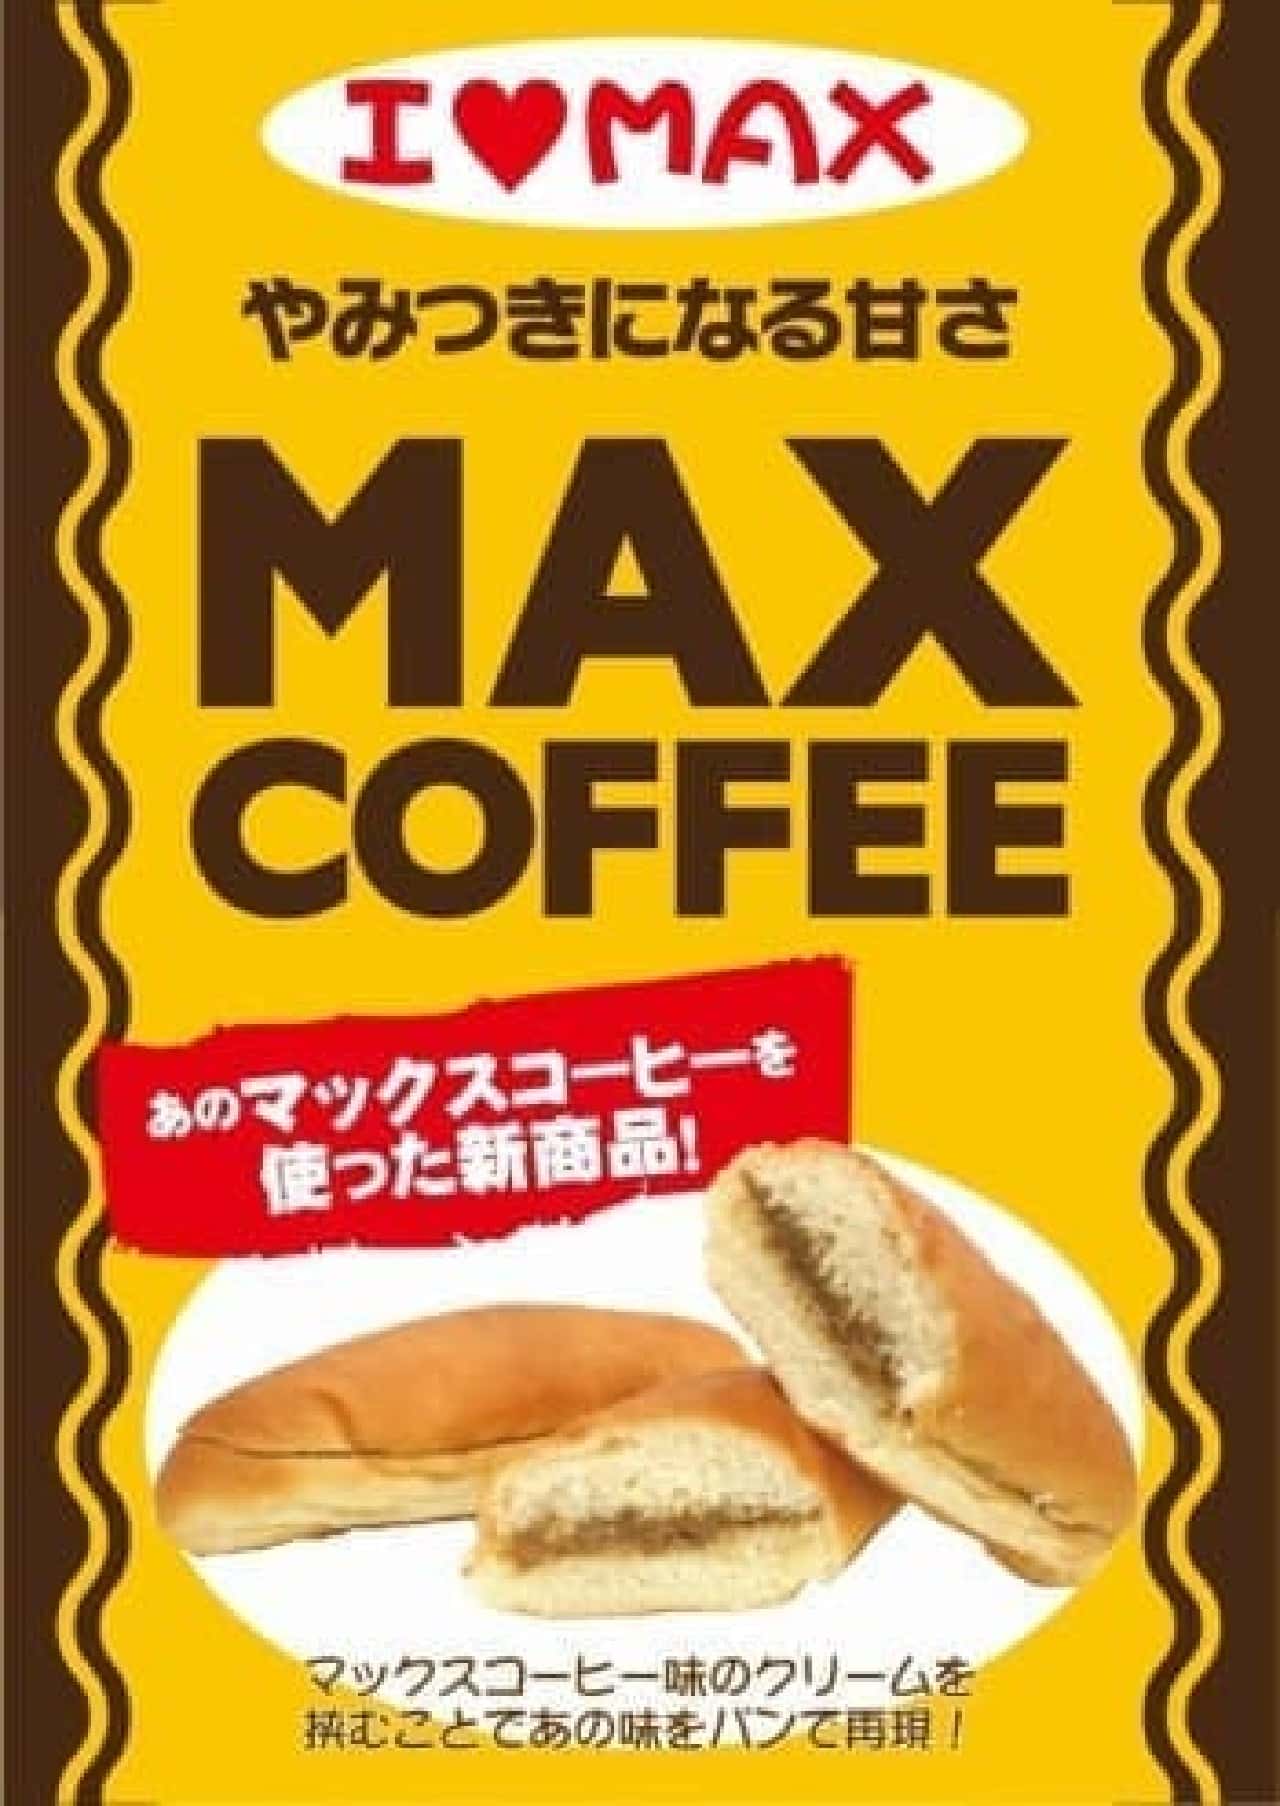 Marondo "Max Coffee Dog"